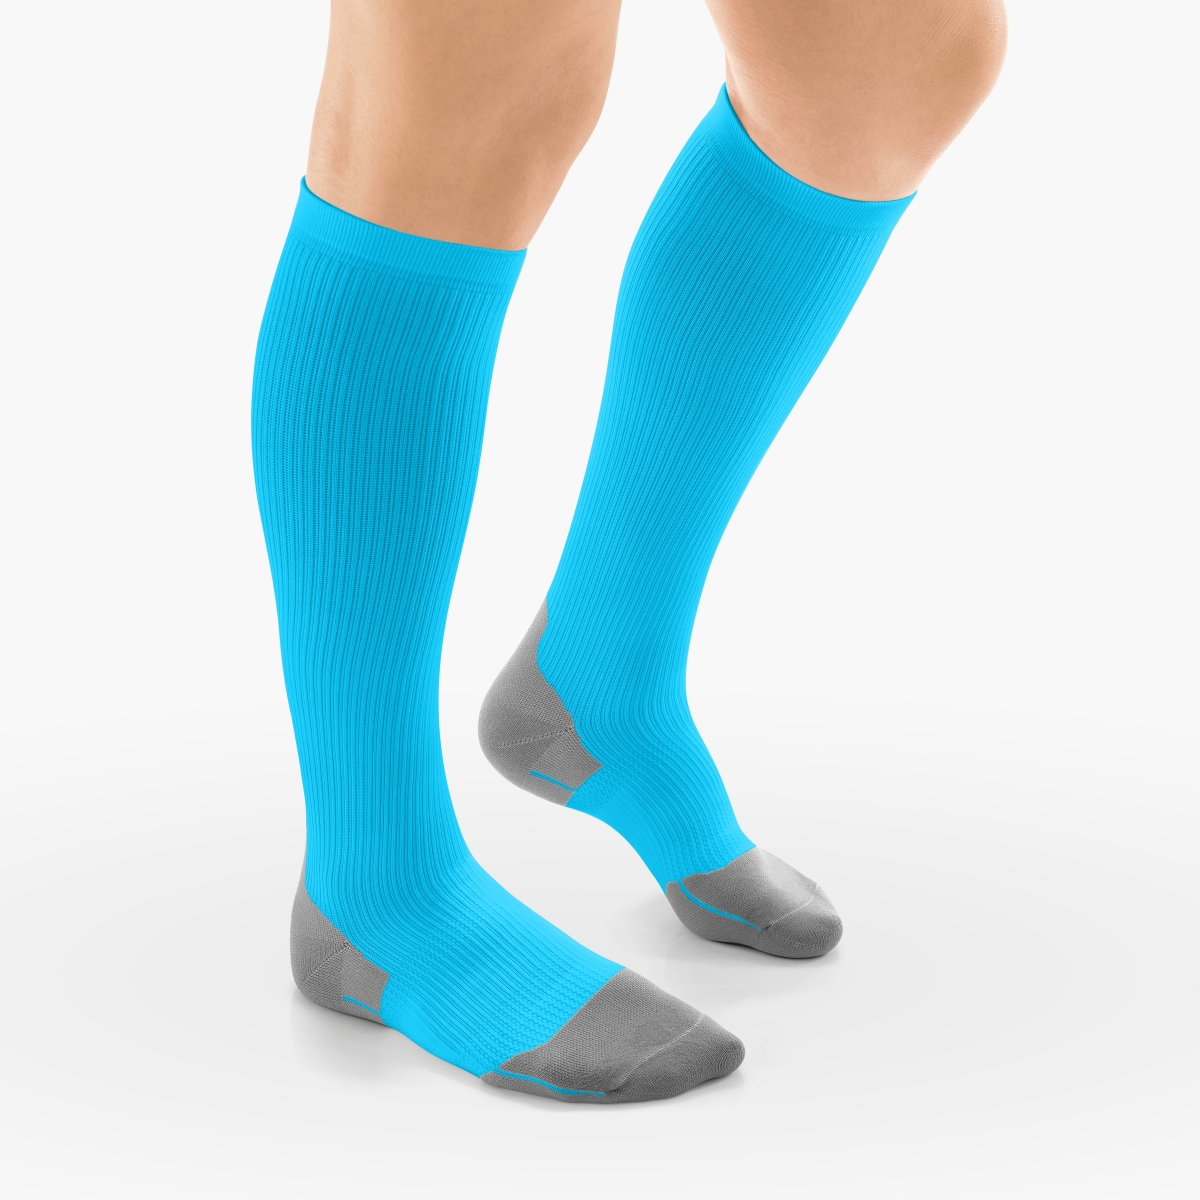 Anti-embolism socks: for safety's sake (after surgery) - Atlanta Vascular &  Vein Center